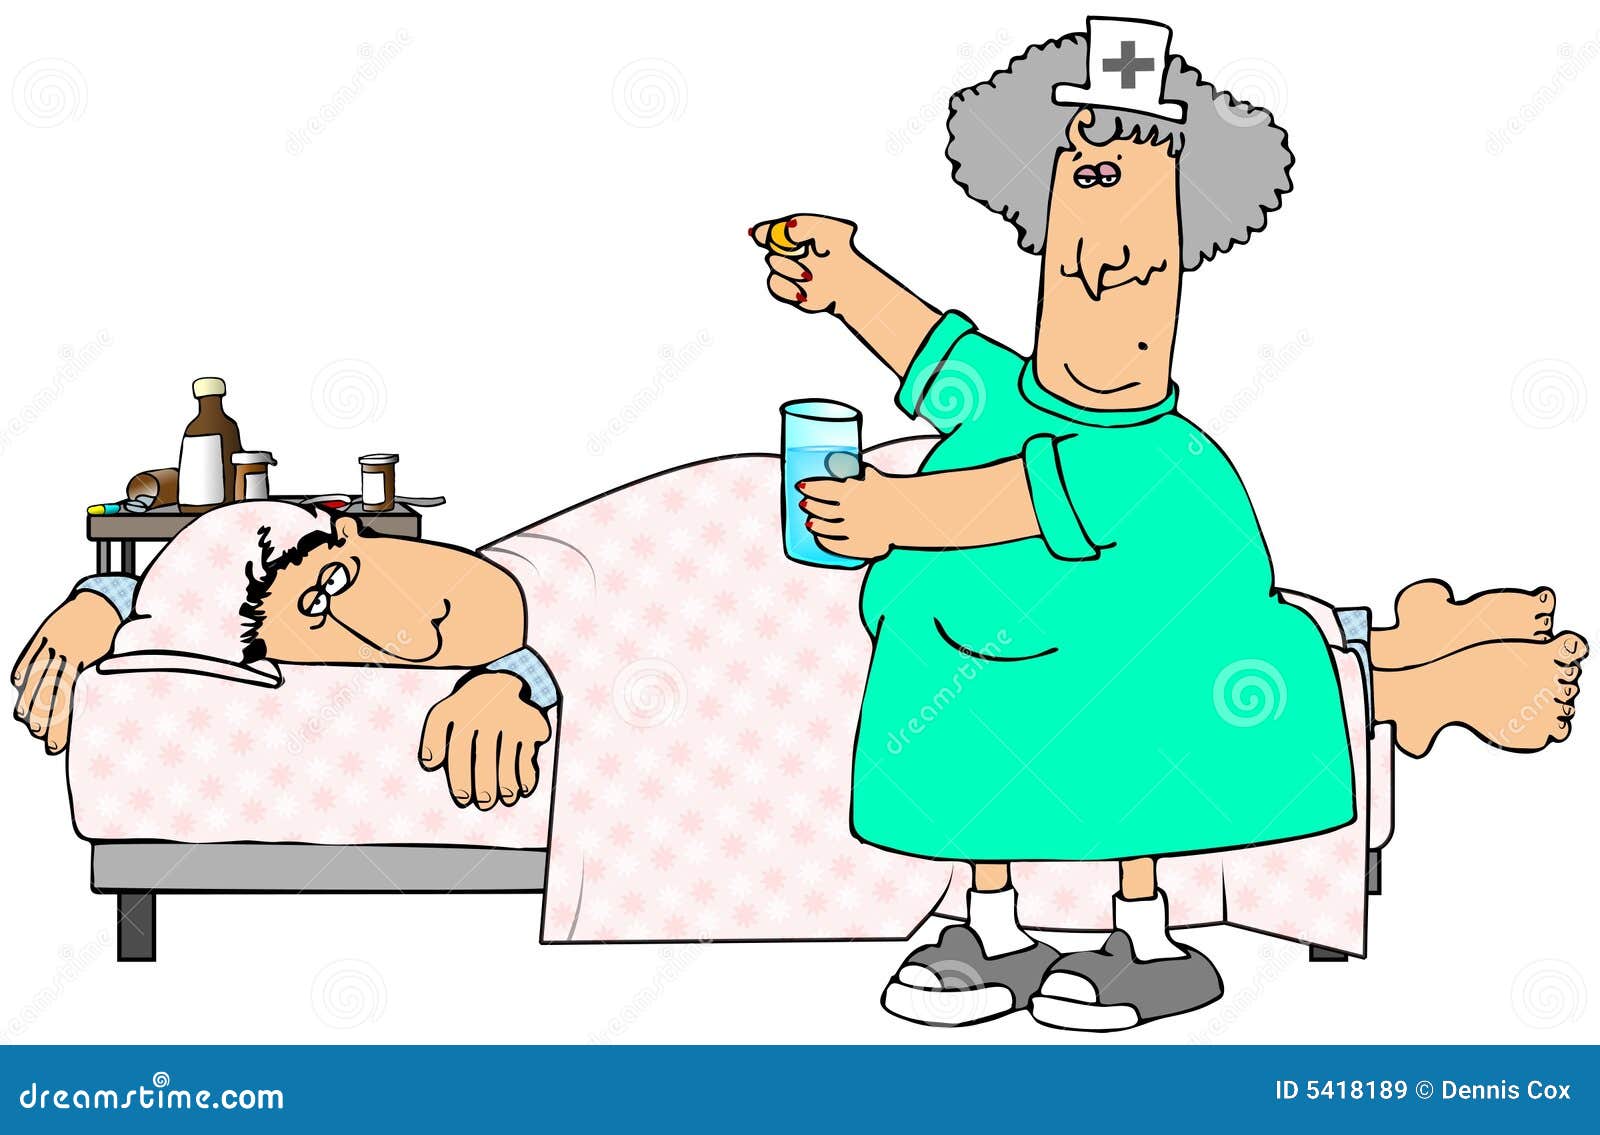 Sick Patient stock illustration. Illustration of patient - 5418189